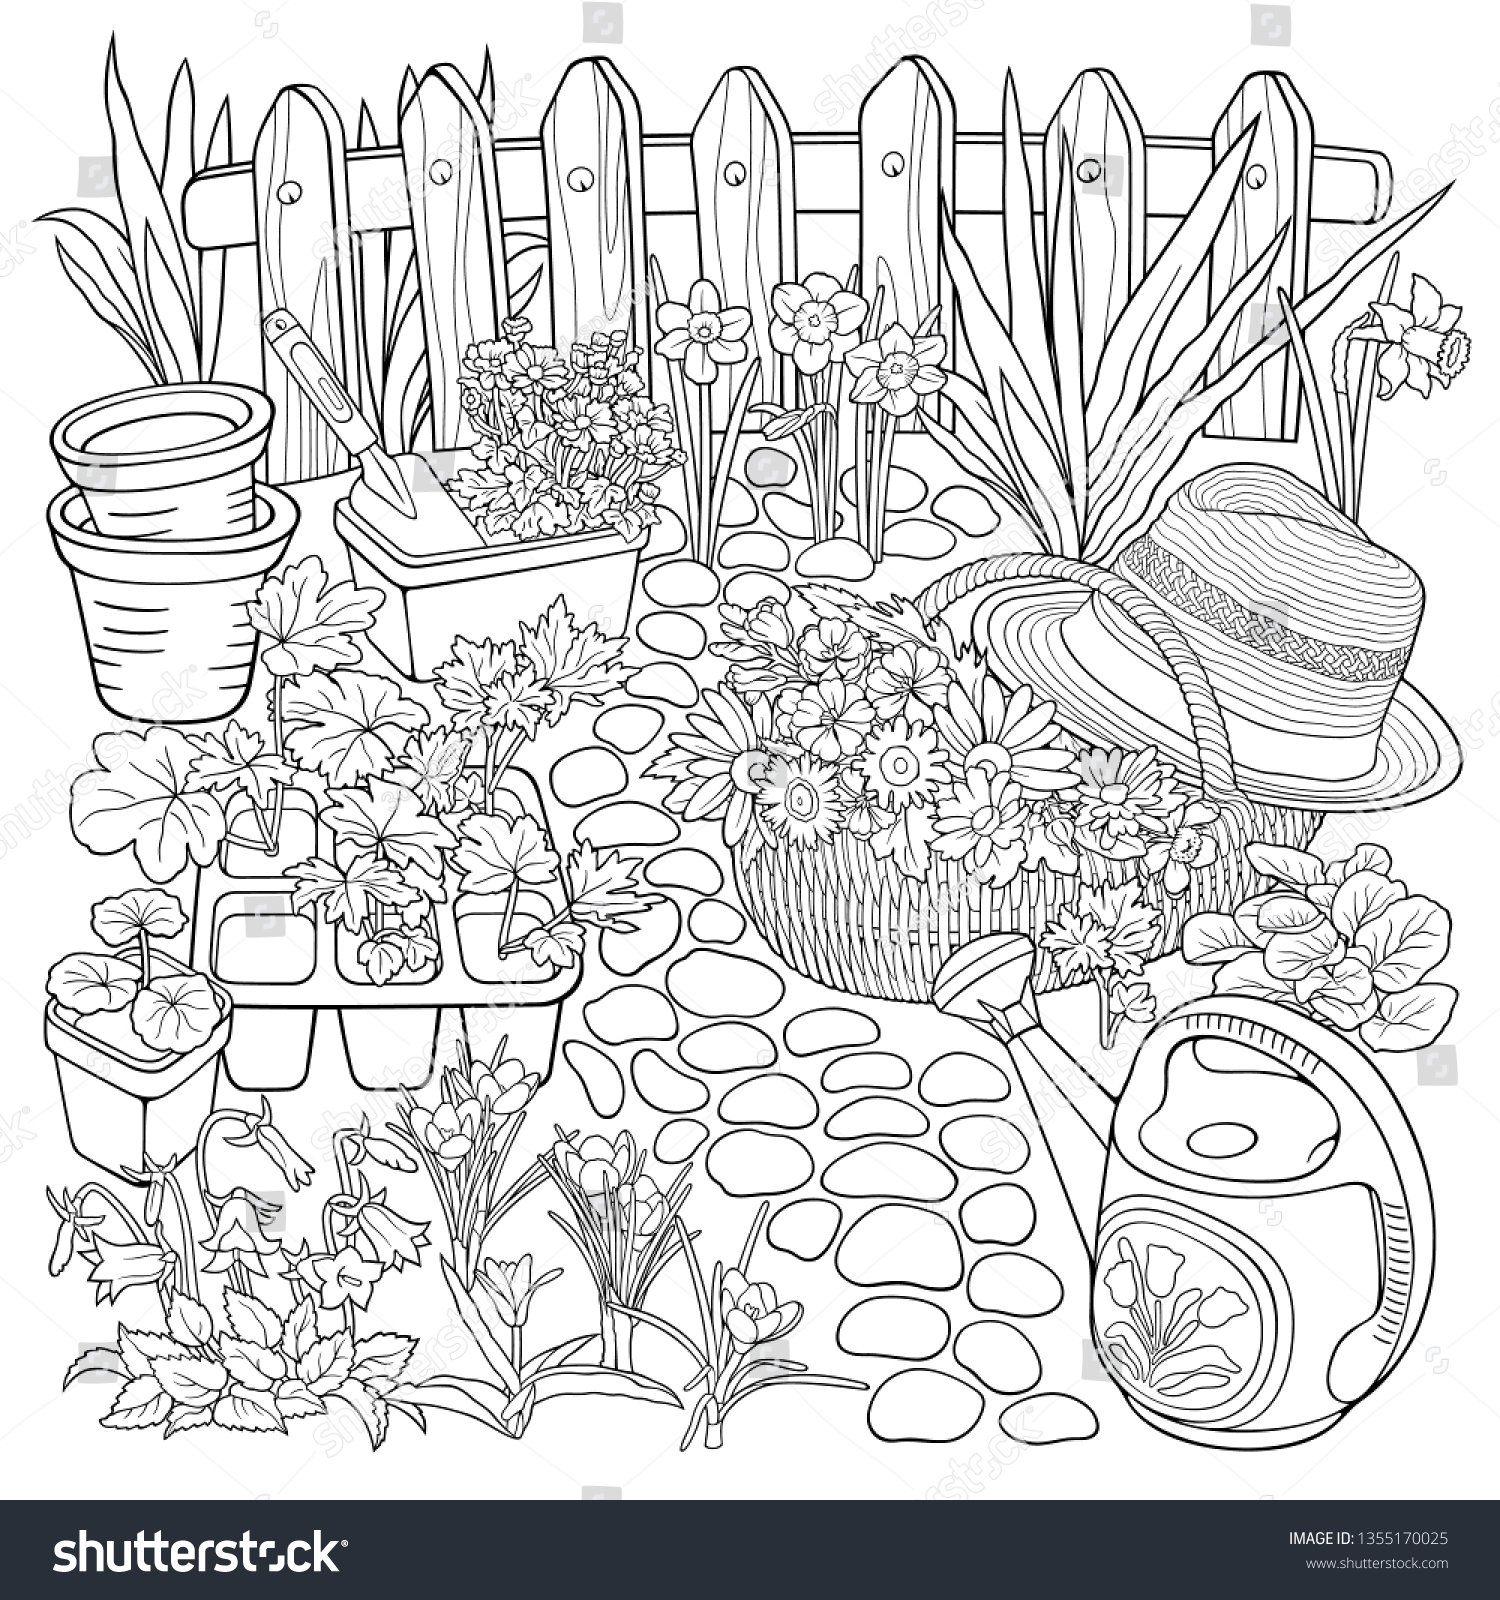 Gardening Hand Drawn Vector Doodles Illustration Stock Vector (Royalty ...